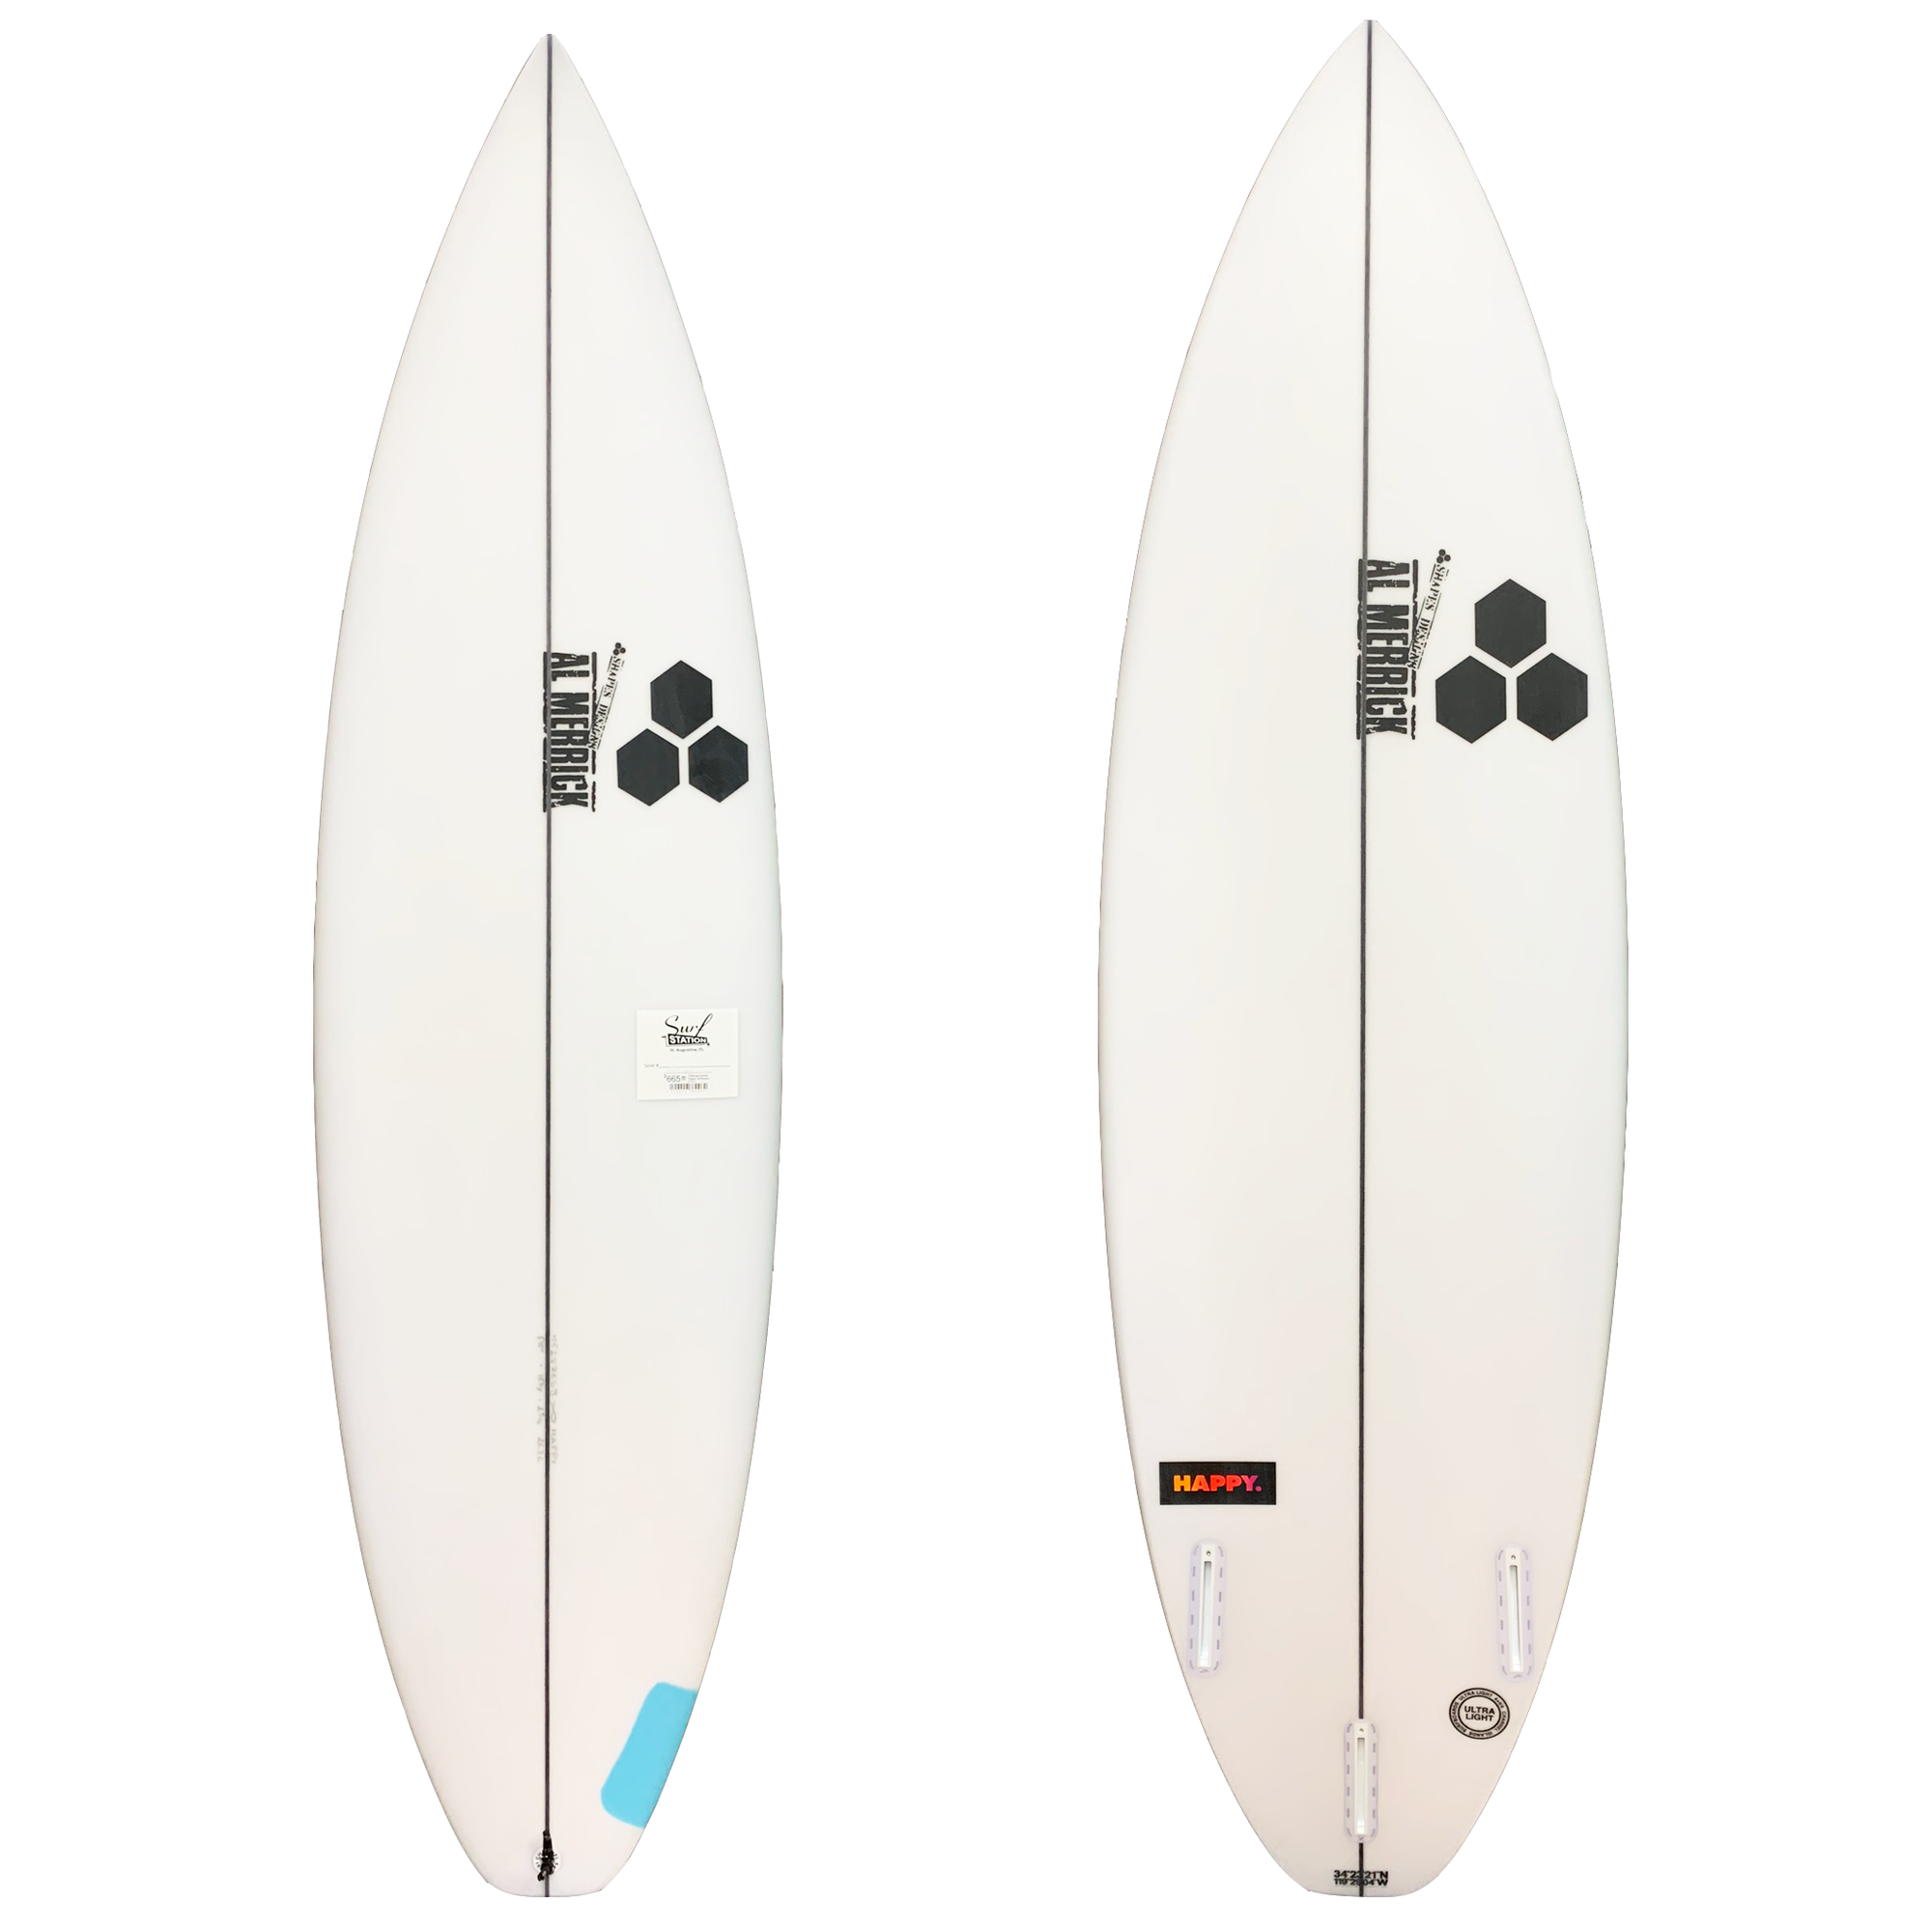 Channel Islands Happy Plus Surfboard - Futures